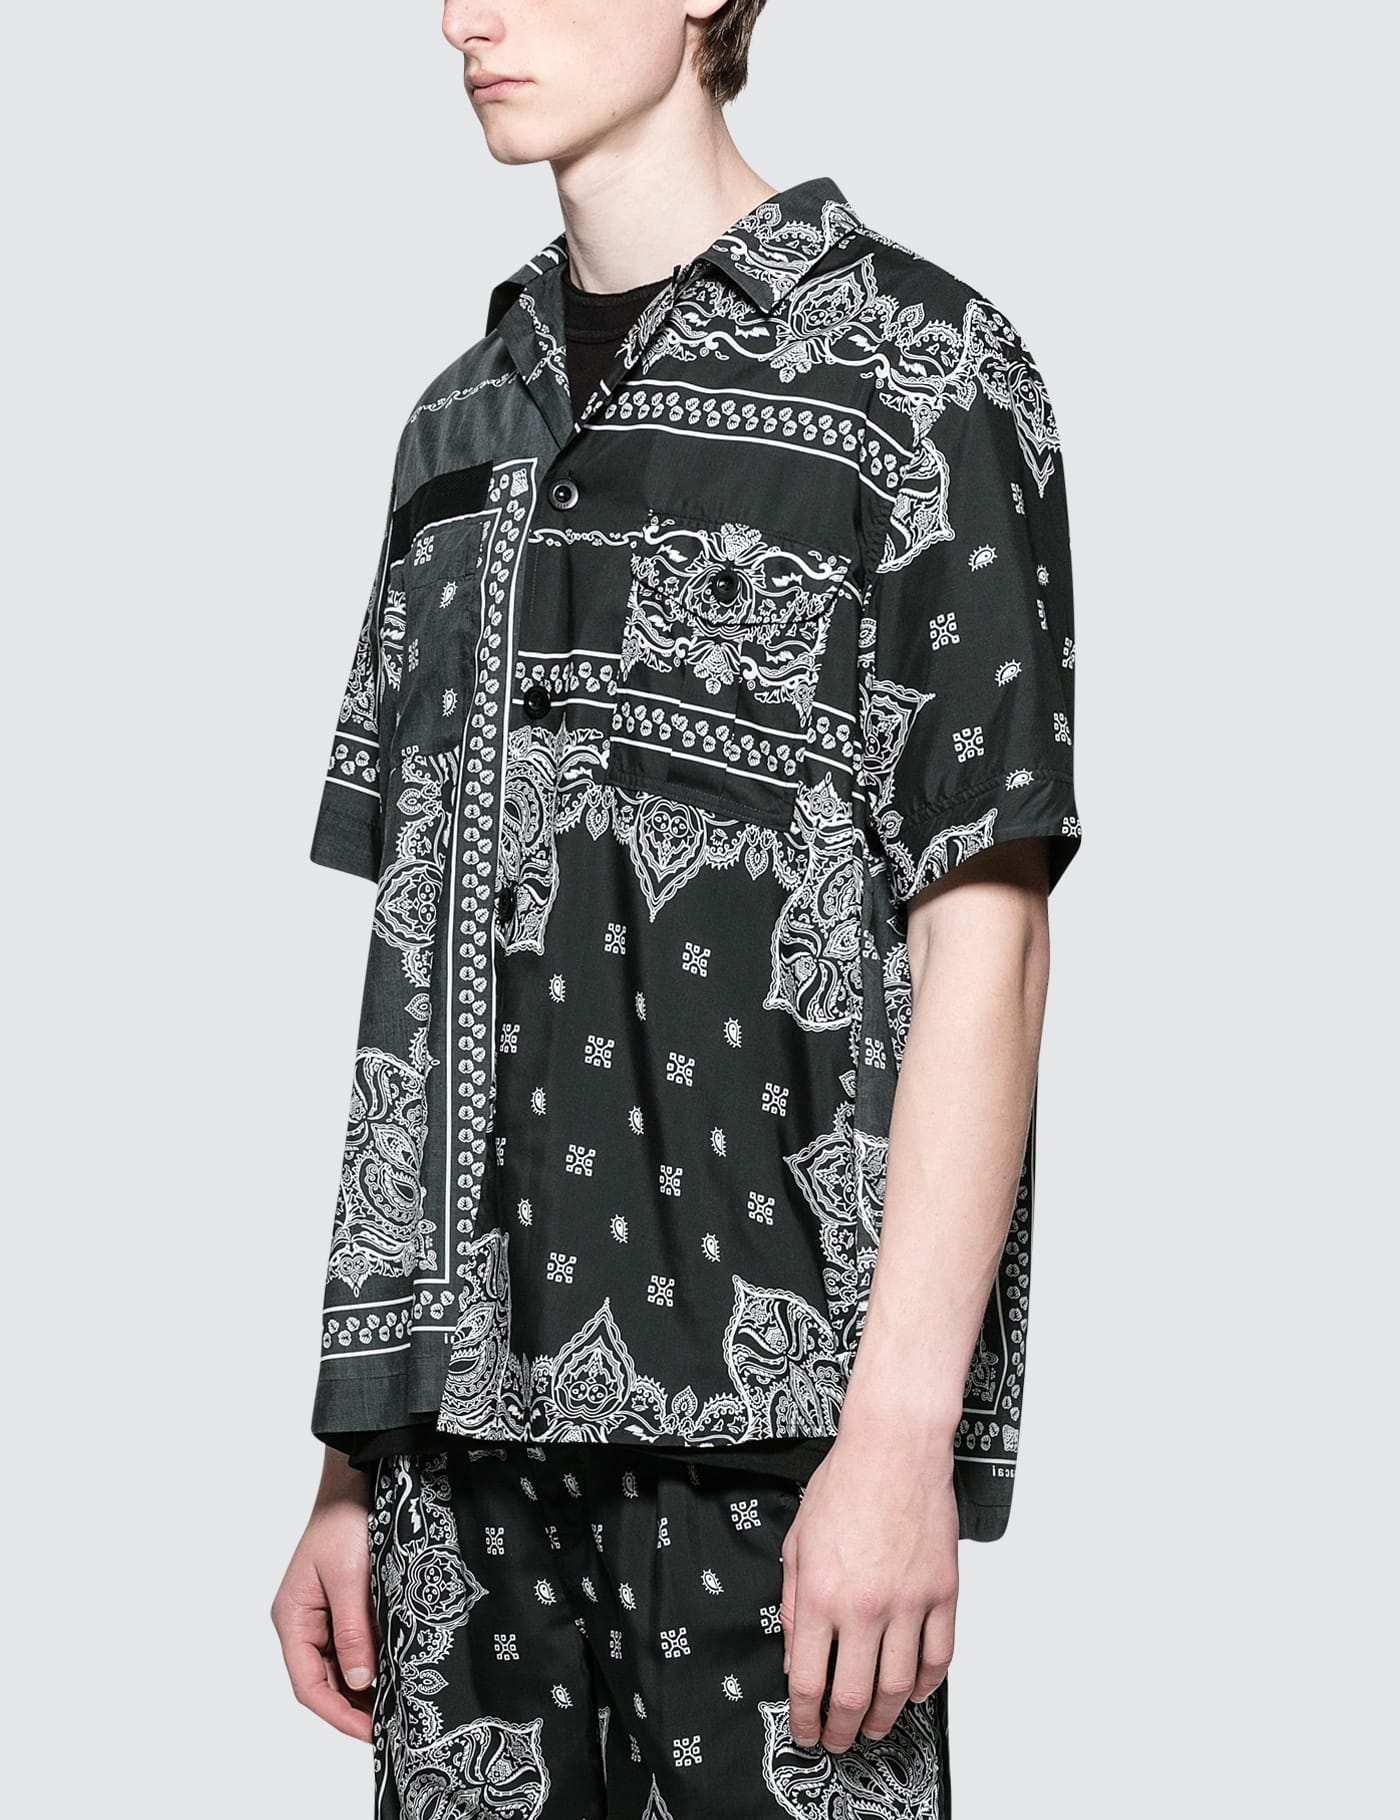 Sacai - Bandana Print Shirt | HBX - Globally Curated Fashion and 